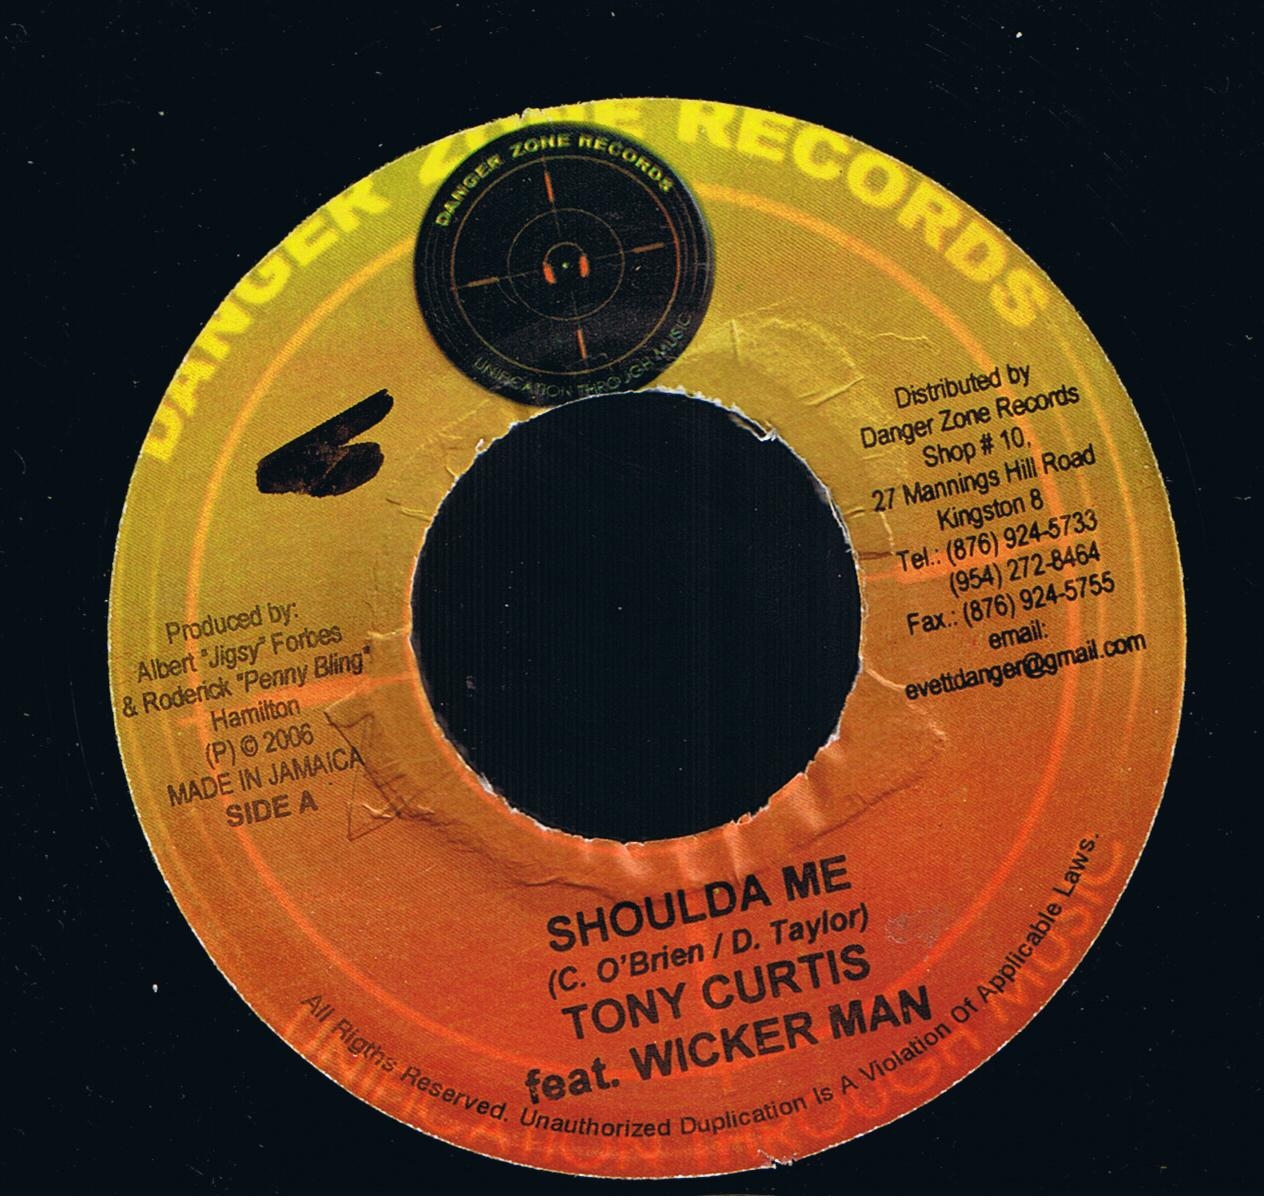 Tony Curtis feat. Wicker Man - Shoulda Me / Wayne Marshall - Talk Is Cheap (7") 